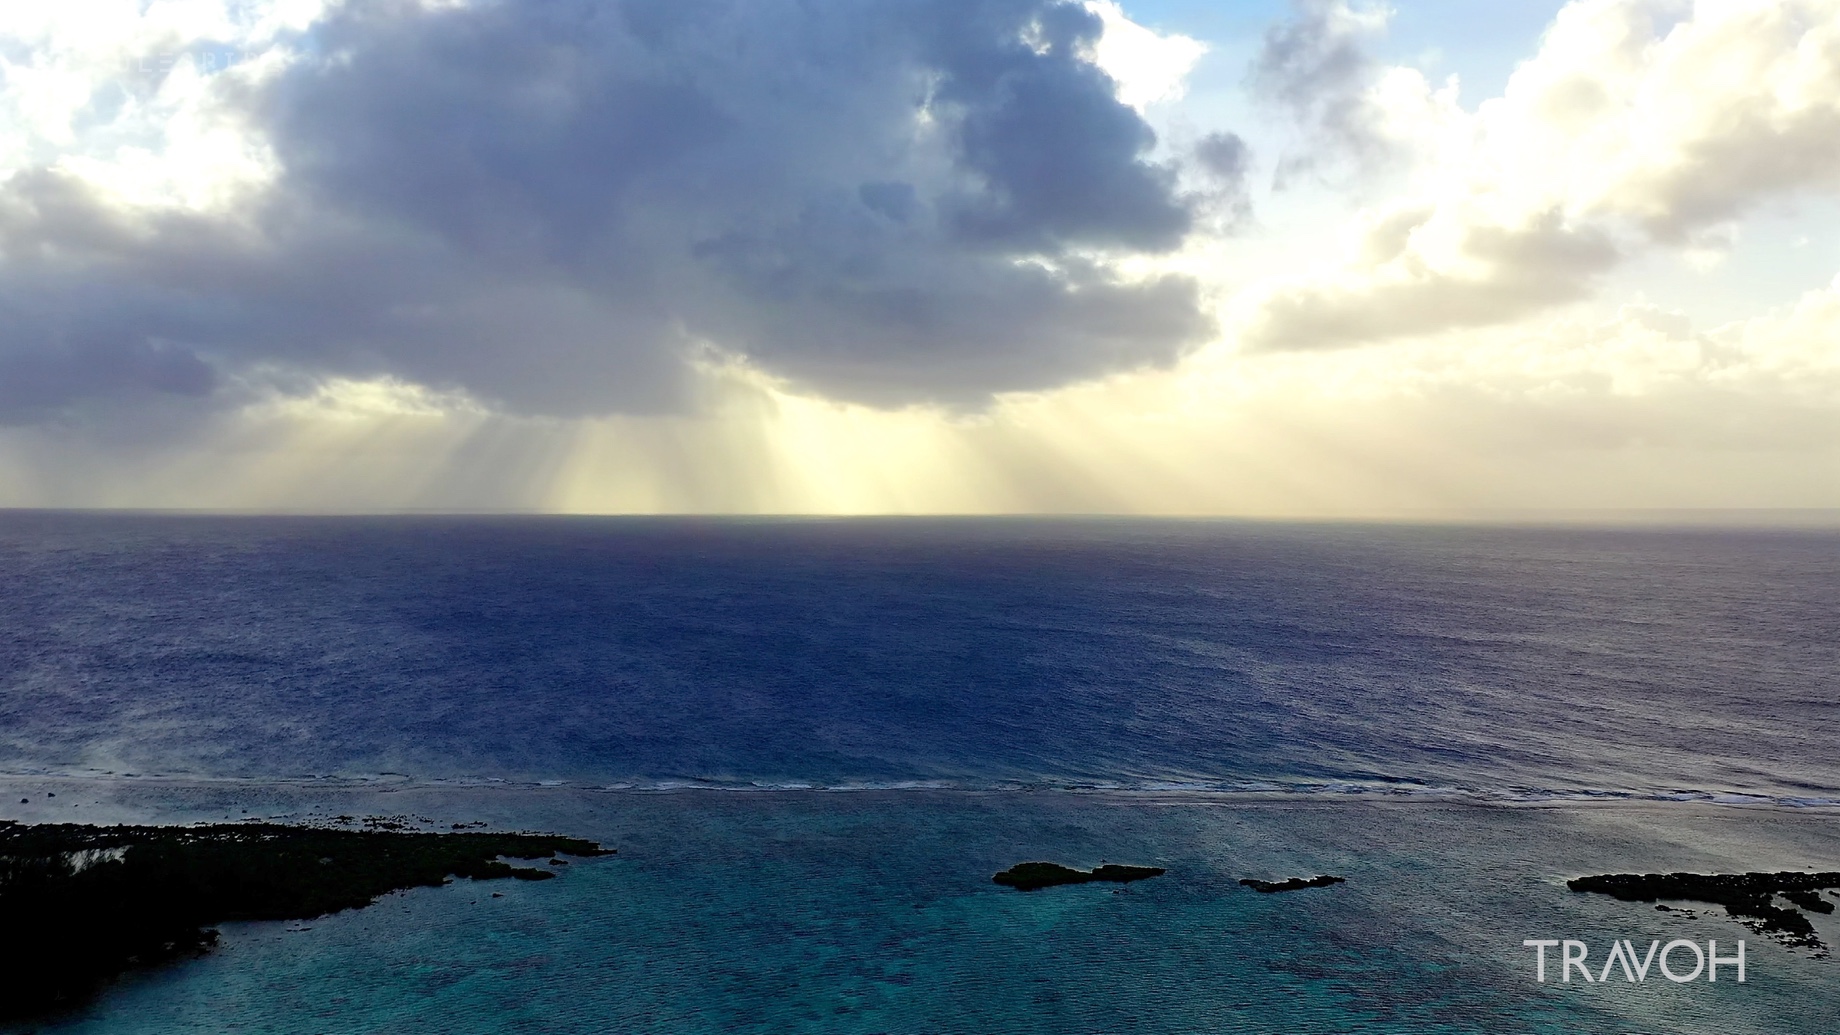 Dramatic Drone Views - South Pacific Ocean Sunset - Bora Bora, French Polynesia - 4K Travel Video